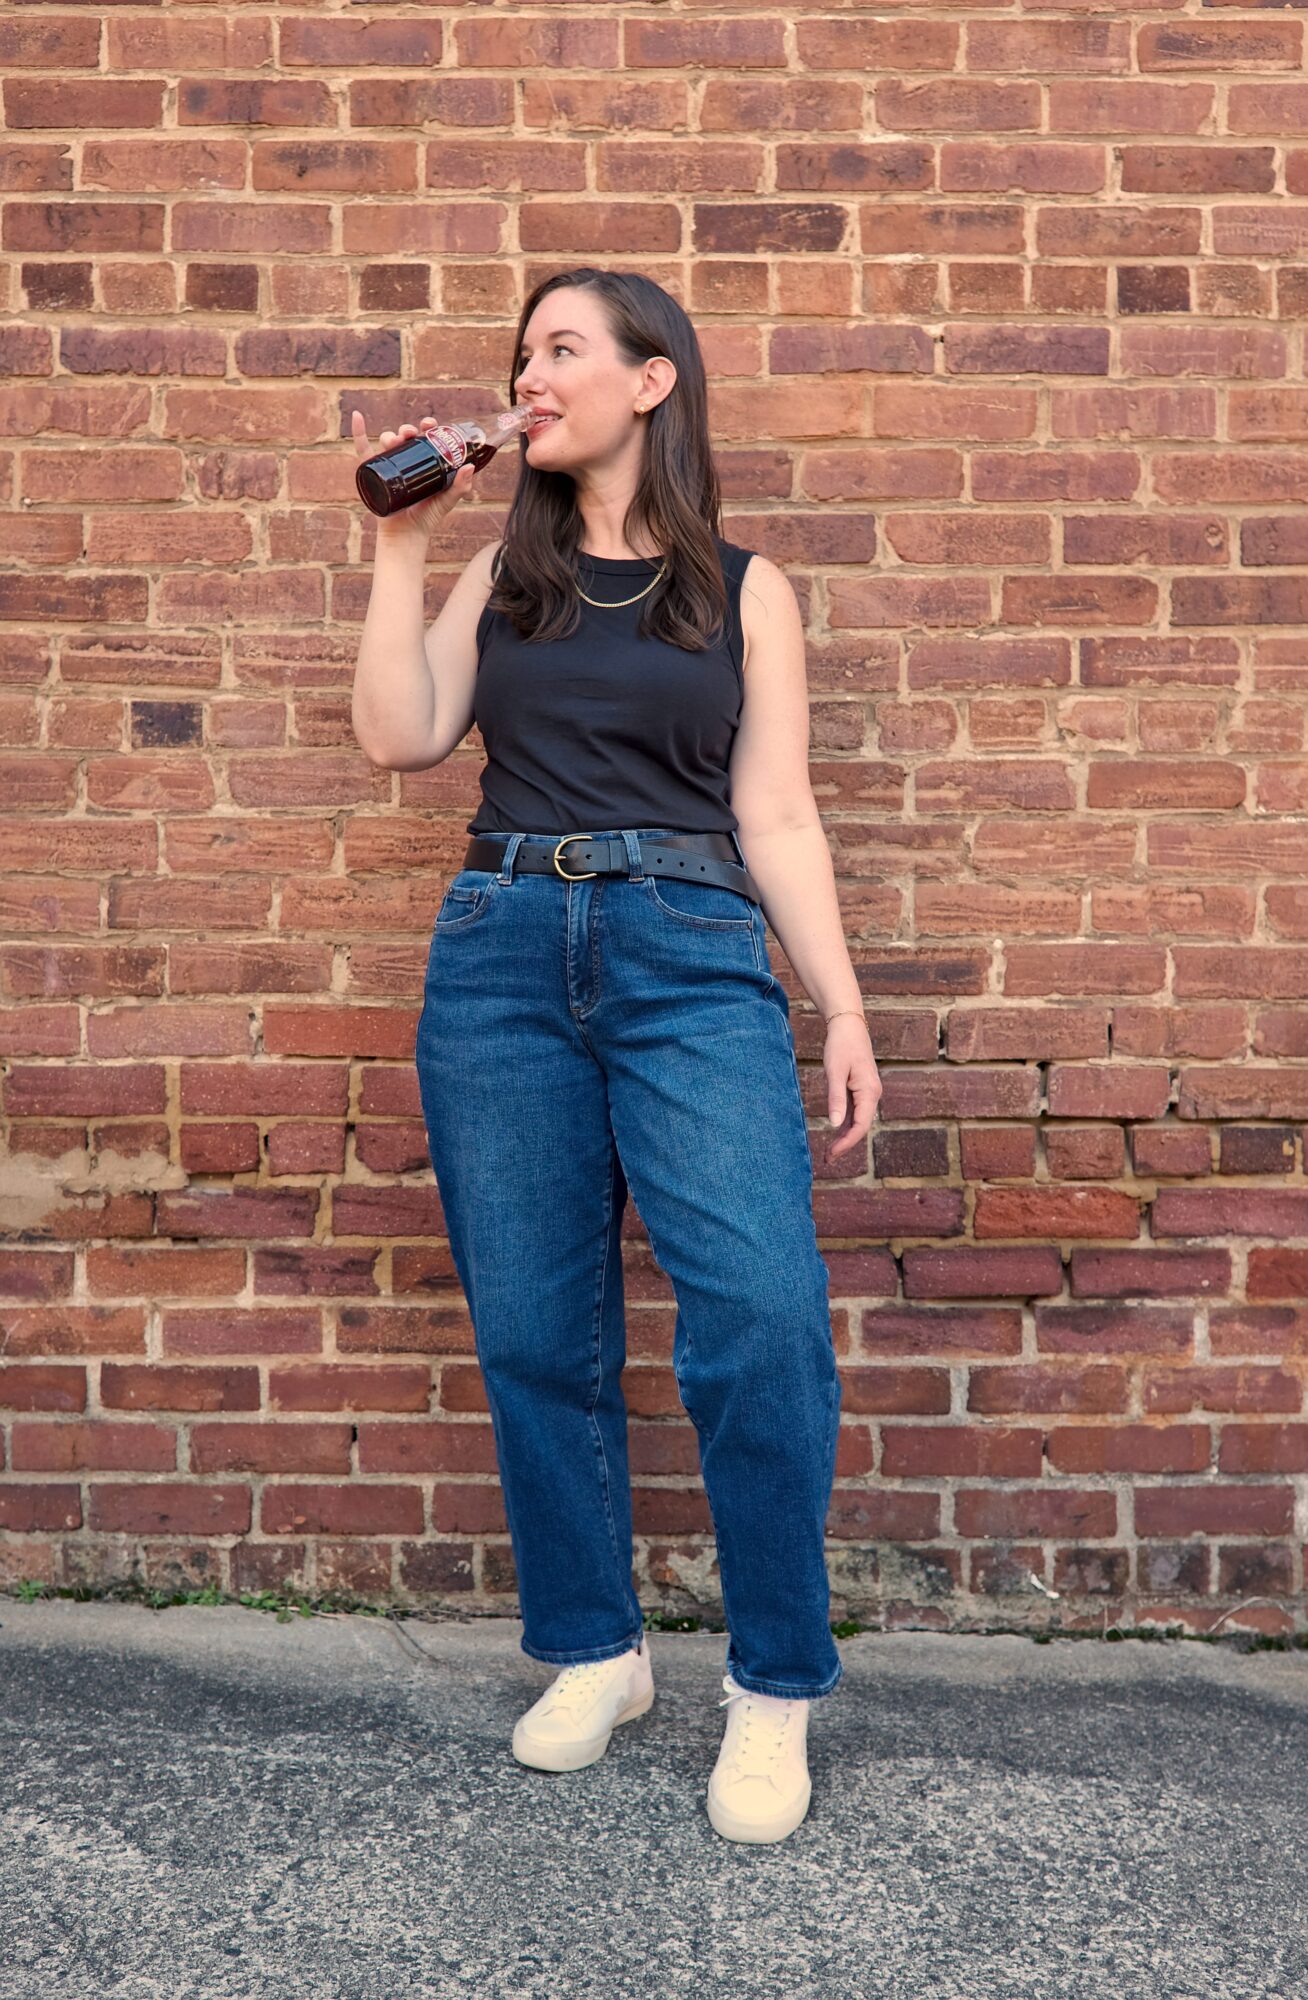 Alyssa drinks from a bottle of Cheerwine in Salisbury, NC